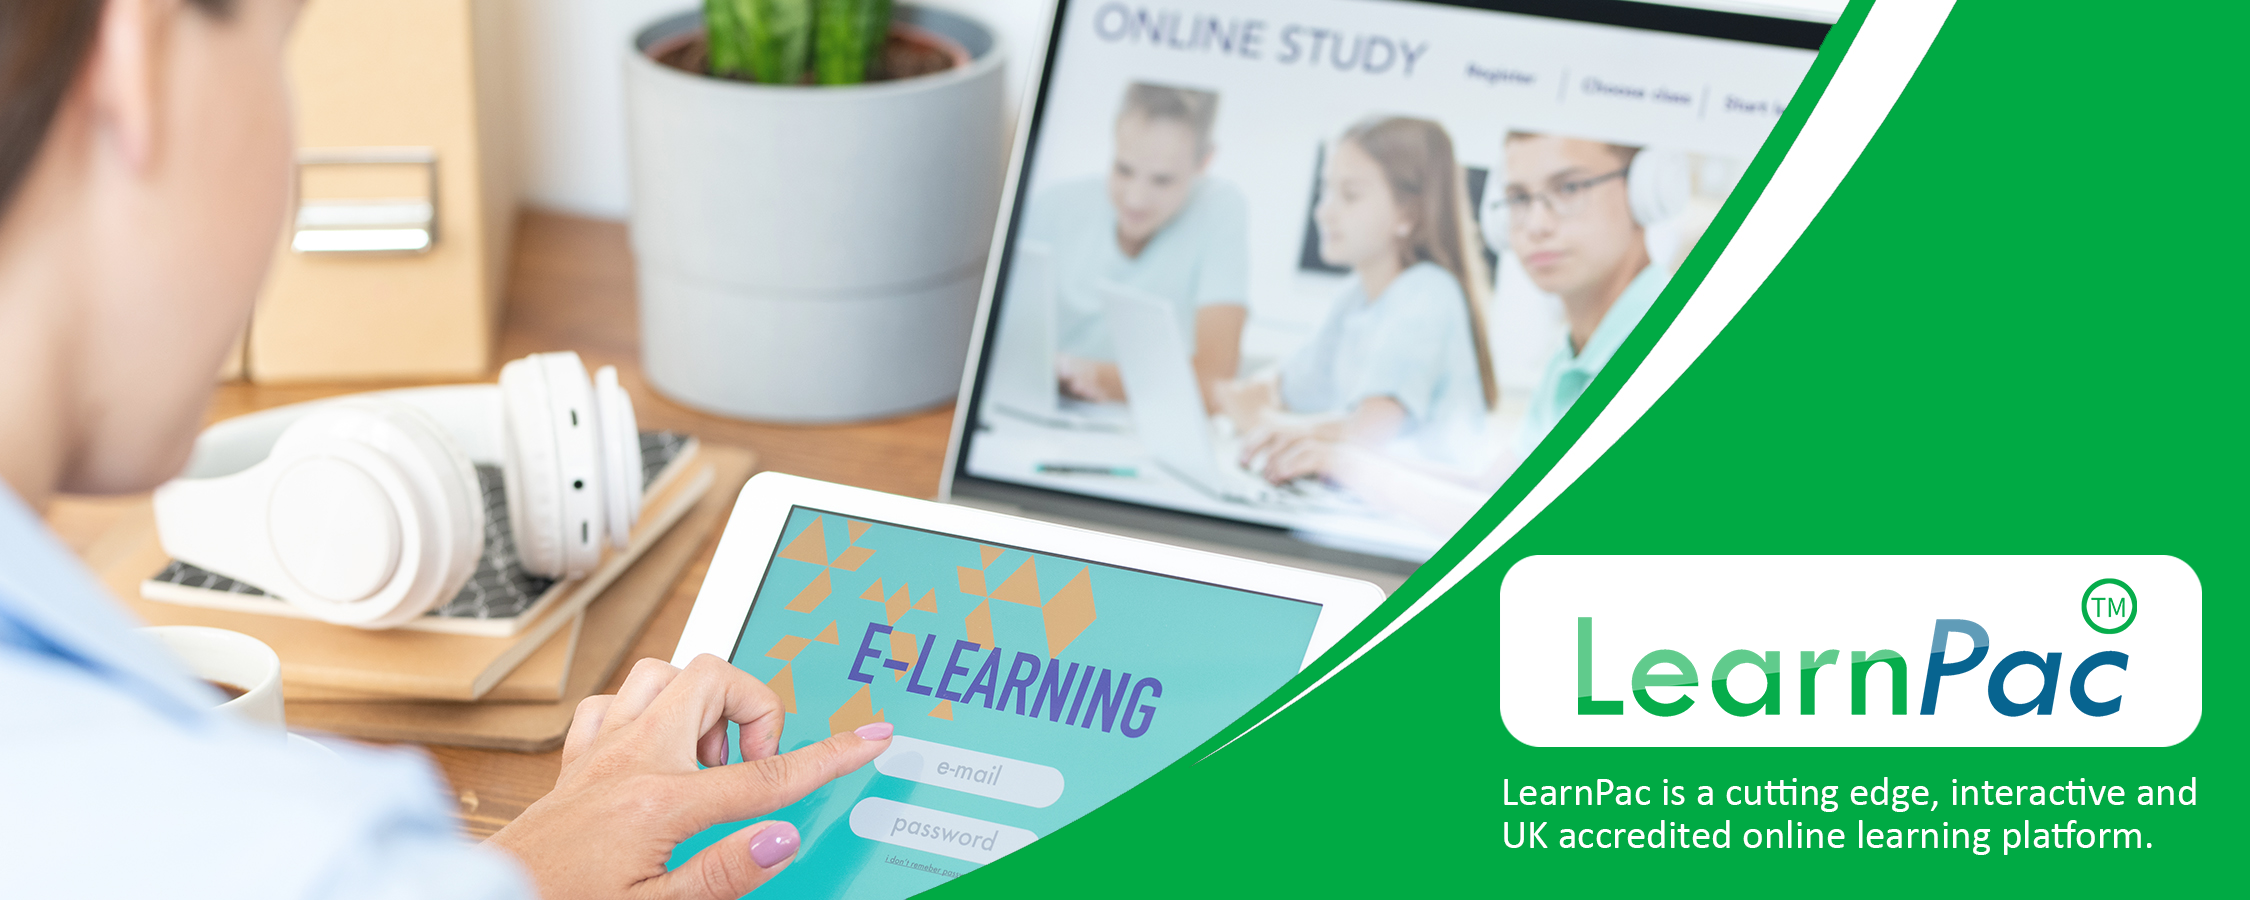 Risk Assessment and Management - Online Learning Courses - E-Learning Courses - LearnPac Systems UK -